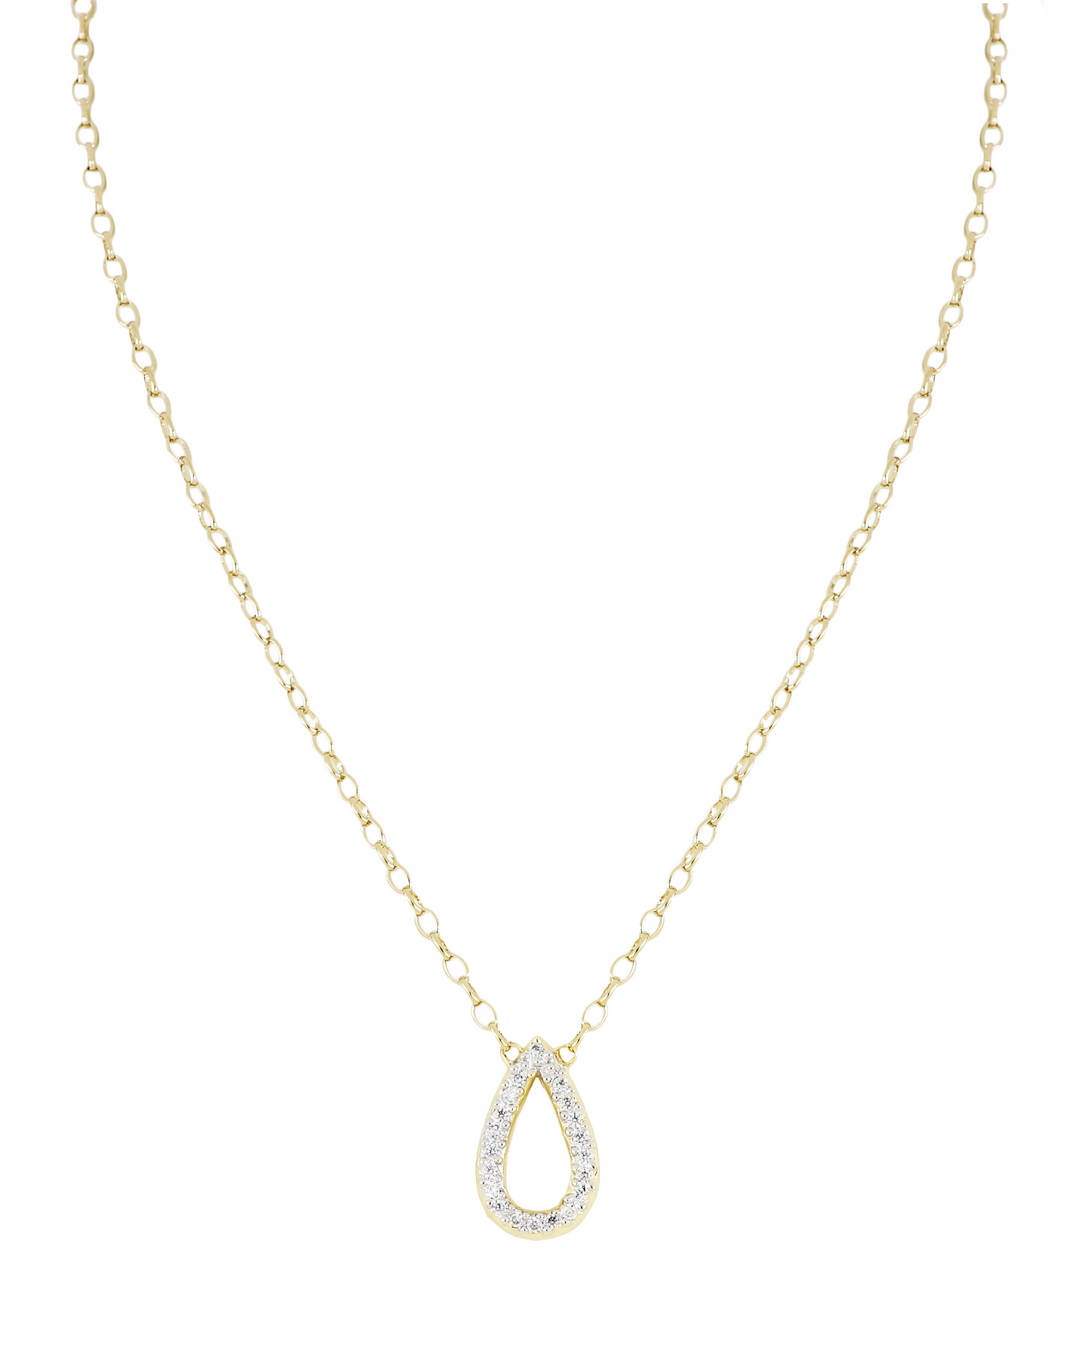 Aldrava Collection - Teardrop Pavé Necklace in Gold